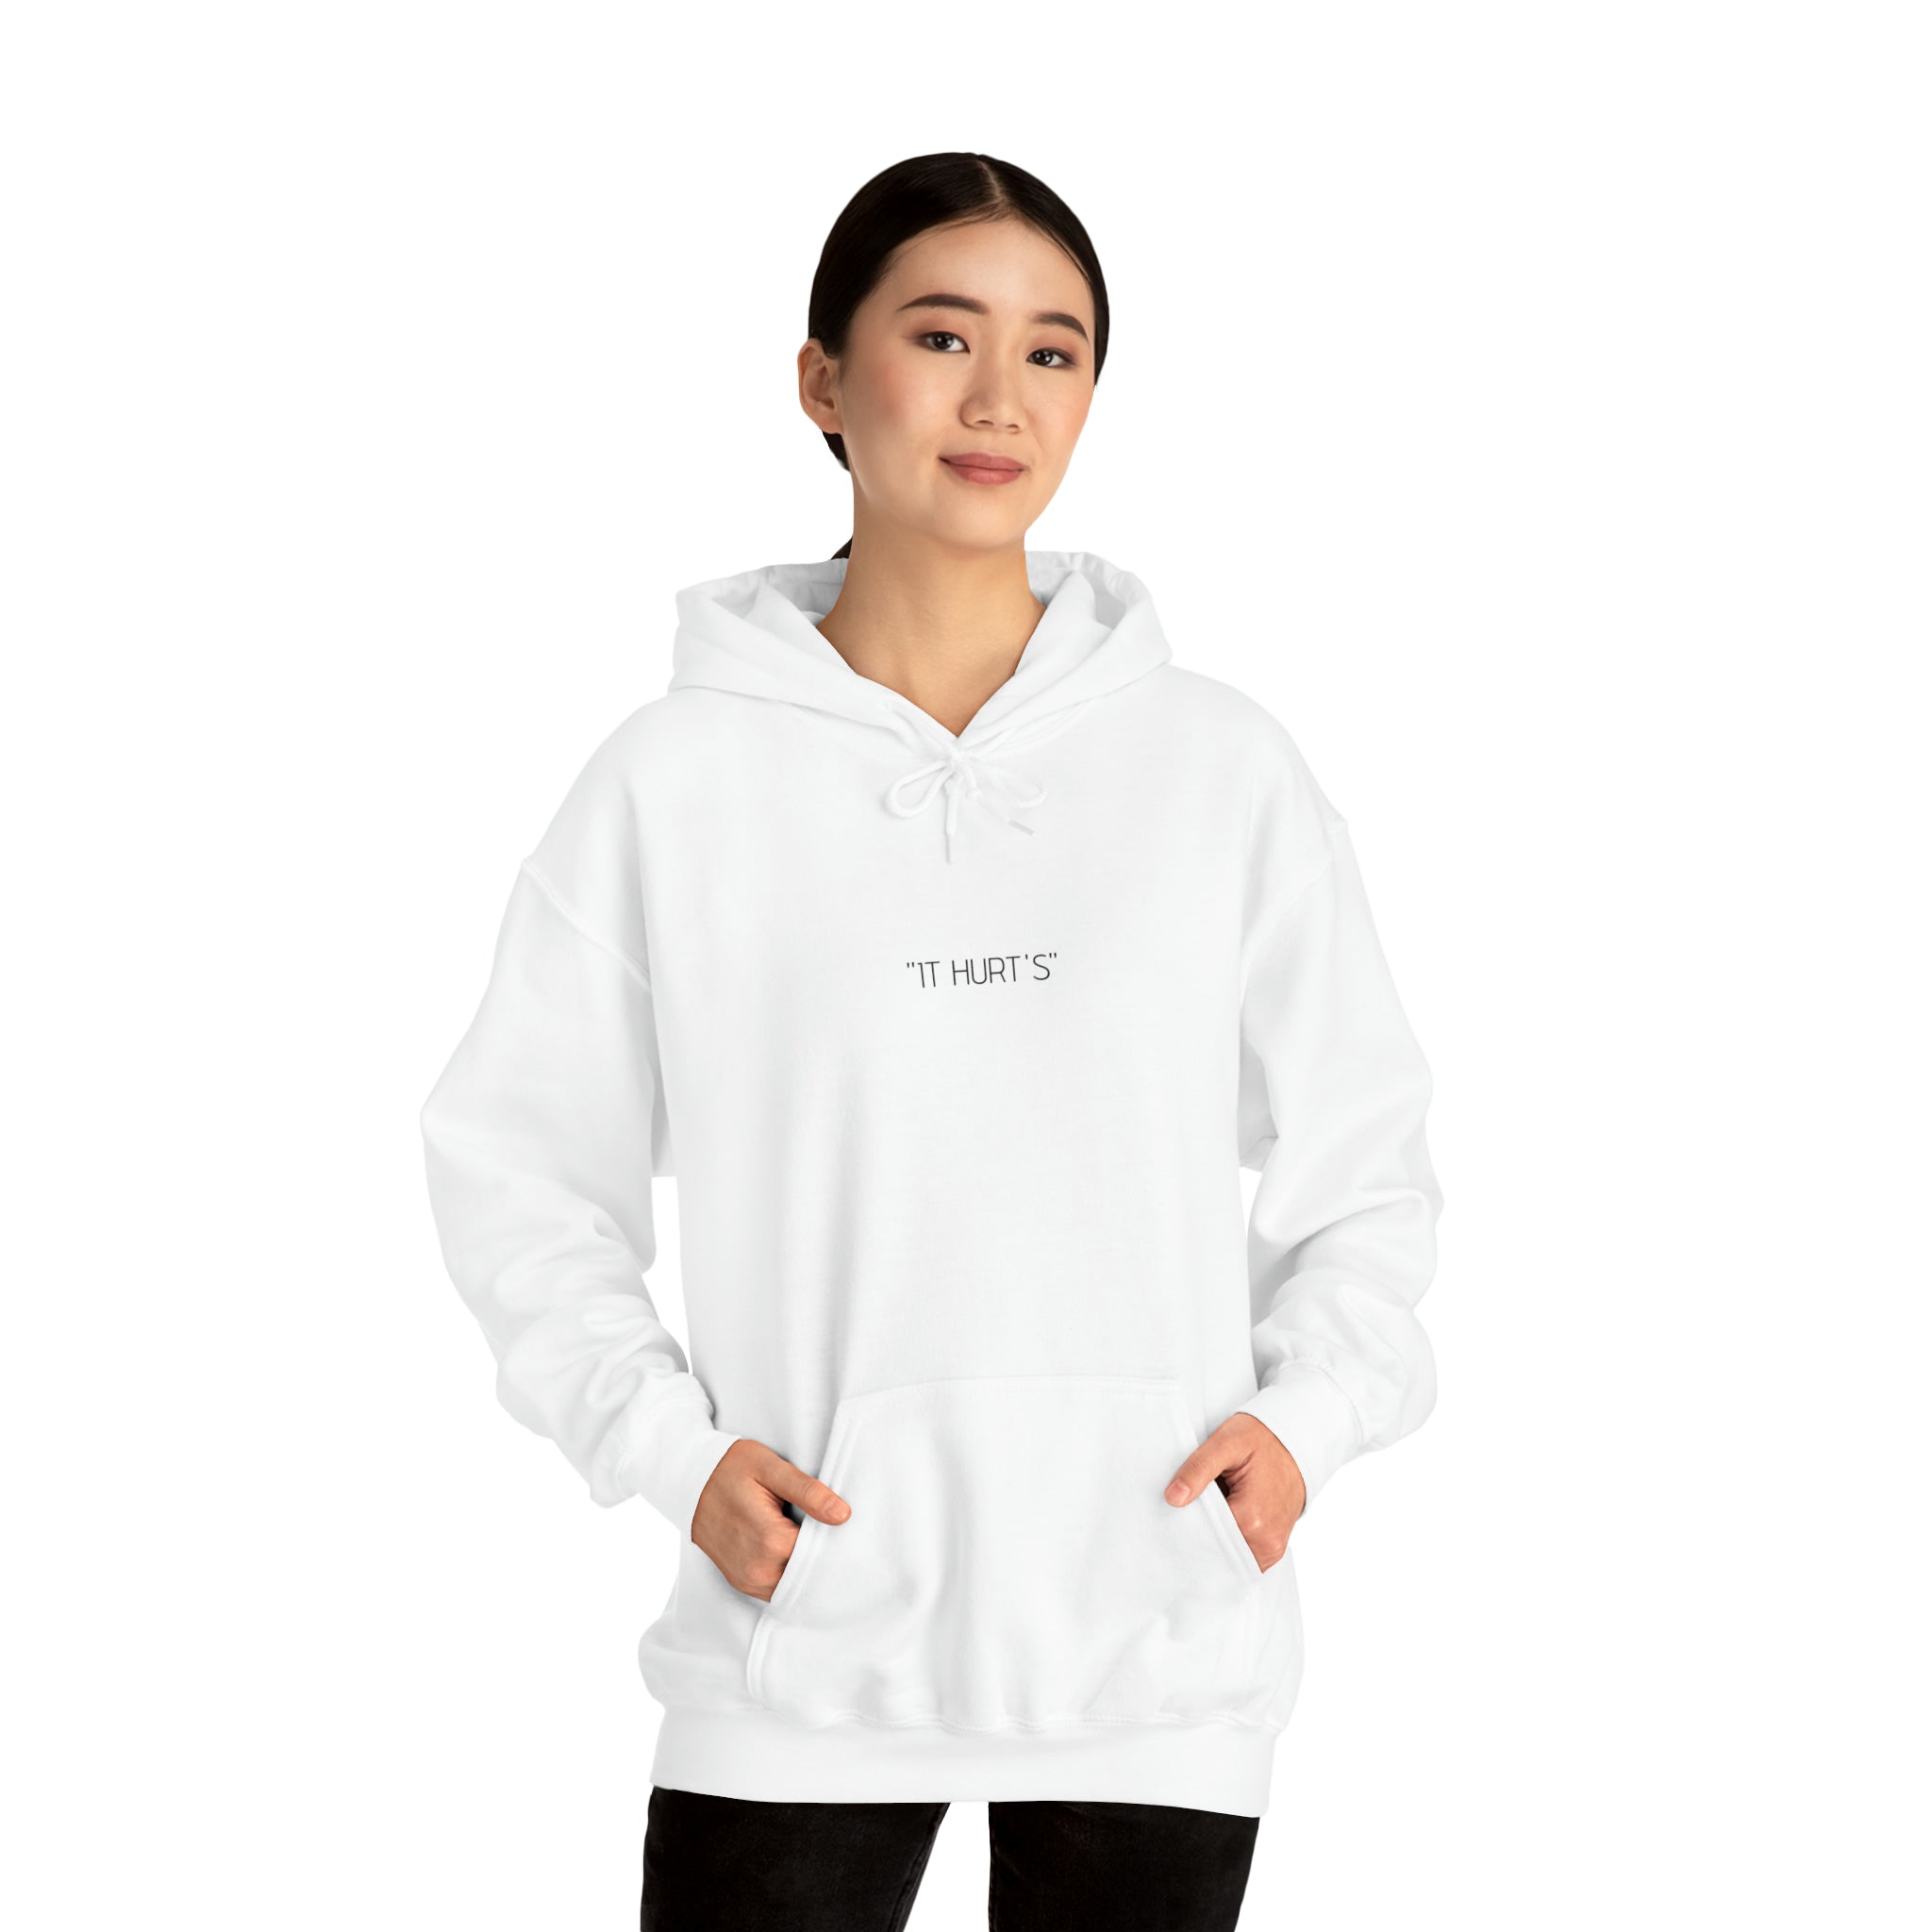 "IT HURT'S" motivational cotton hoodie